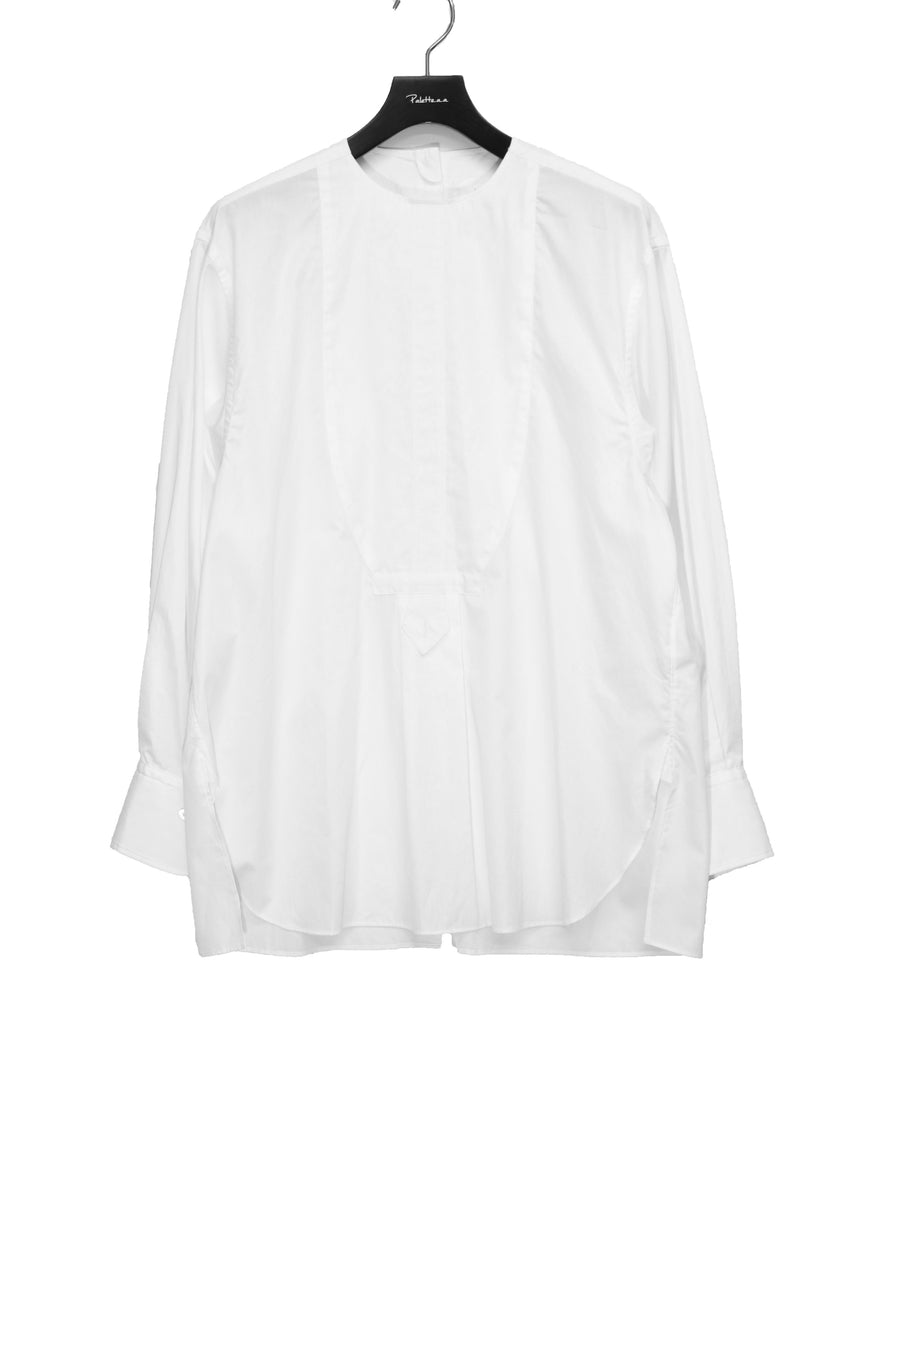 JOHN MASON SMITH  COTTON BROAD CLASSIC DRESS SHIRT(WHITE)